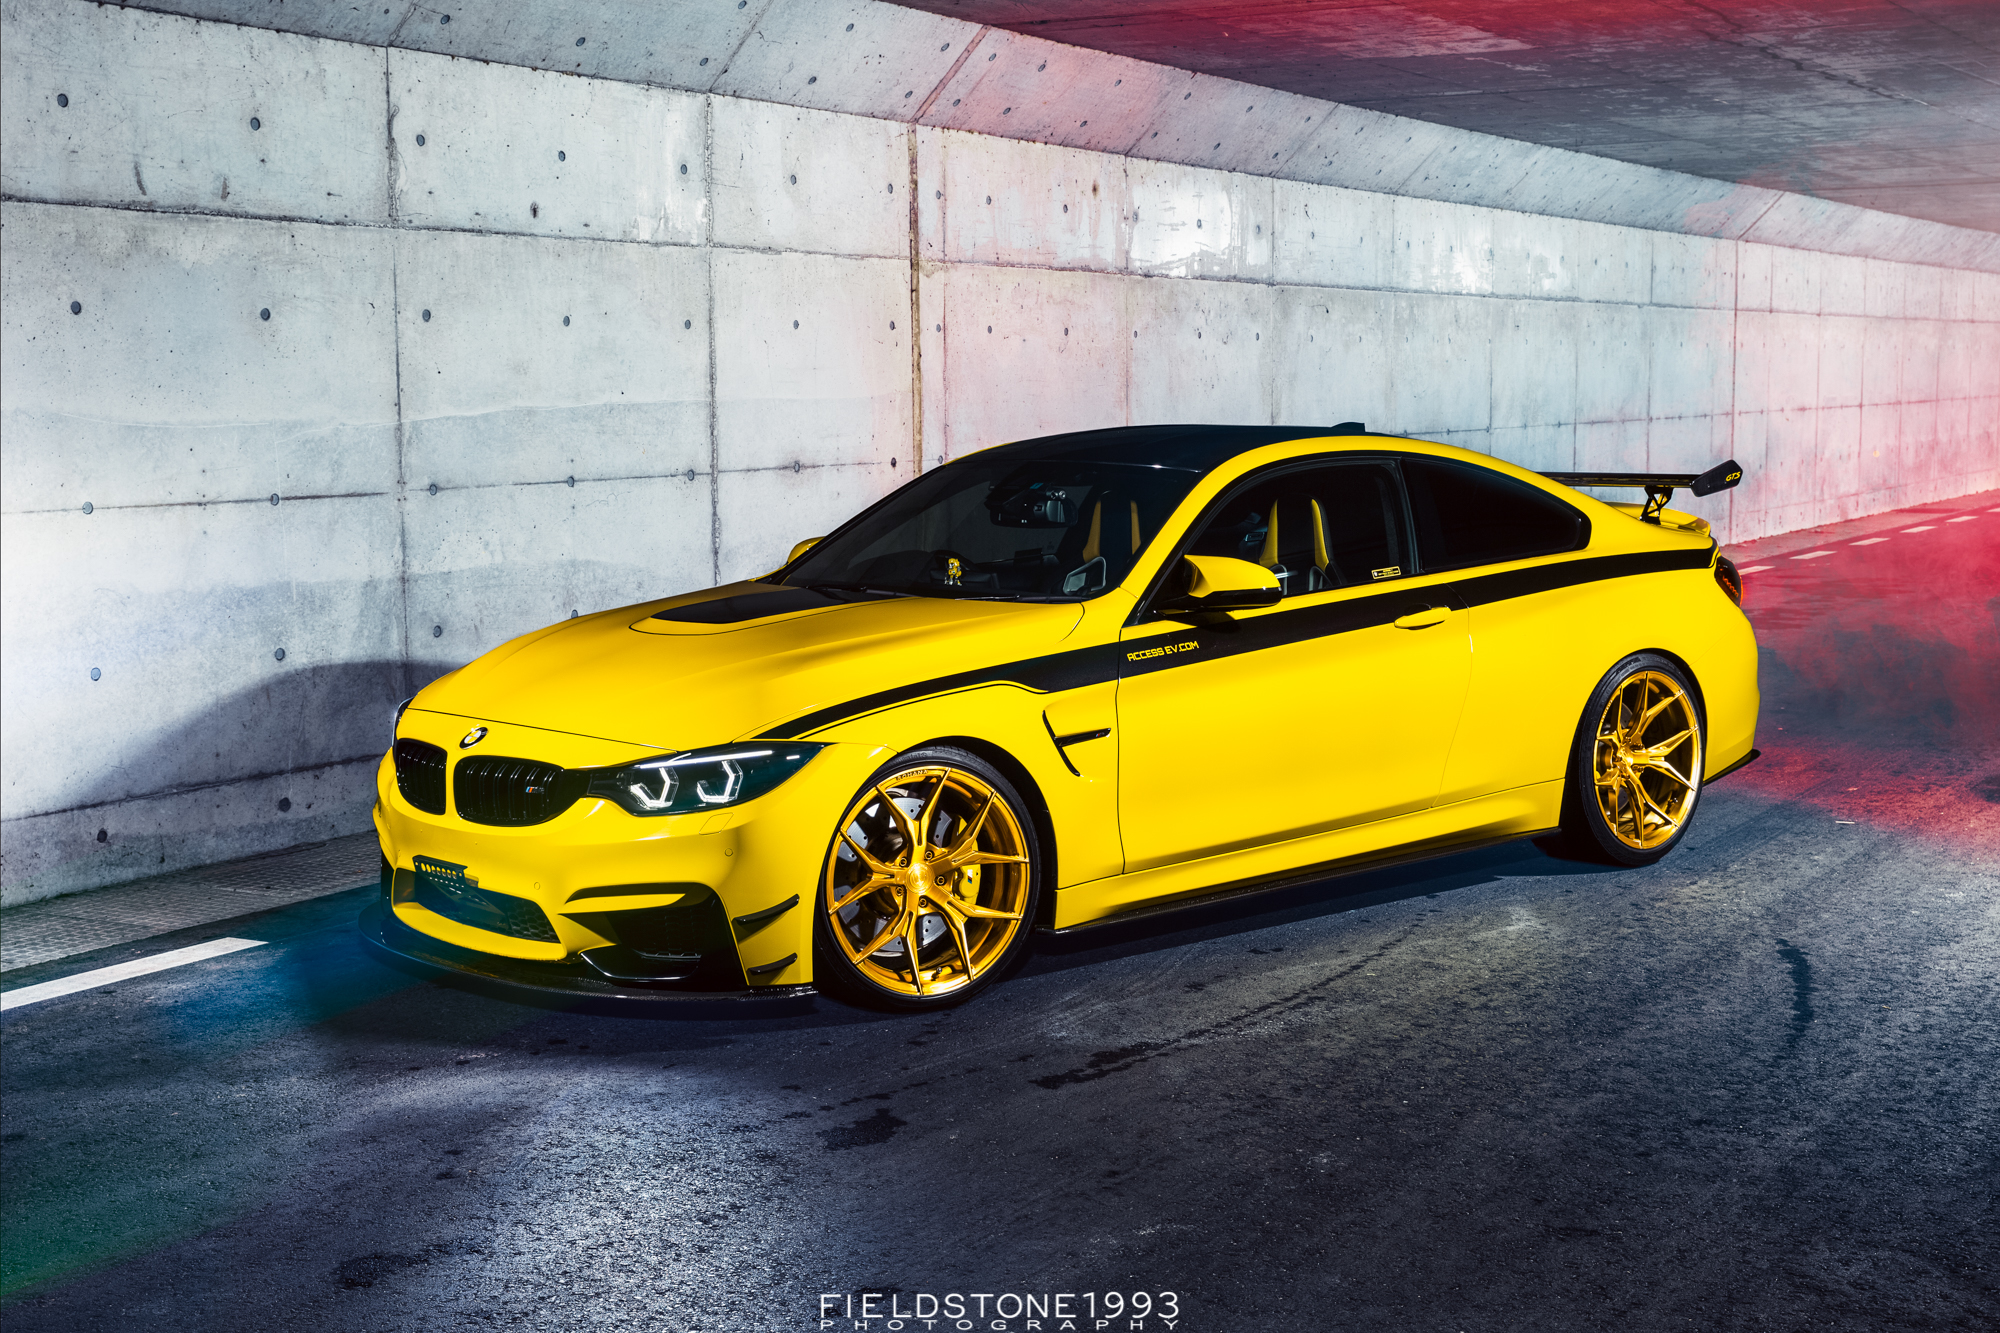 General 2000x1333 car BMW yellow cars BMW M4 watermarked BMW F80/F82/F83 colored wheels vehicle